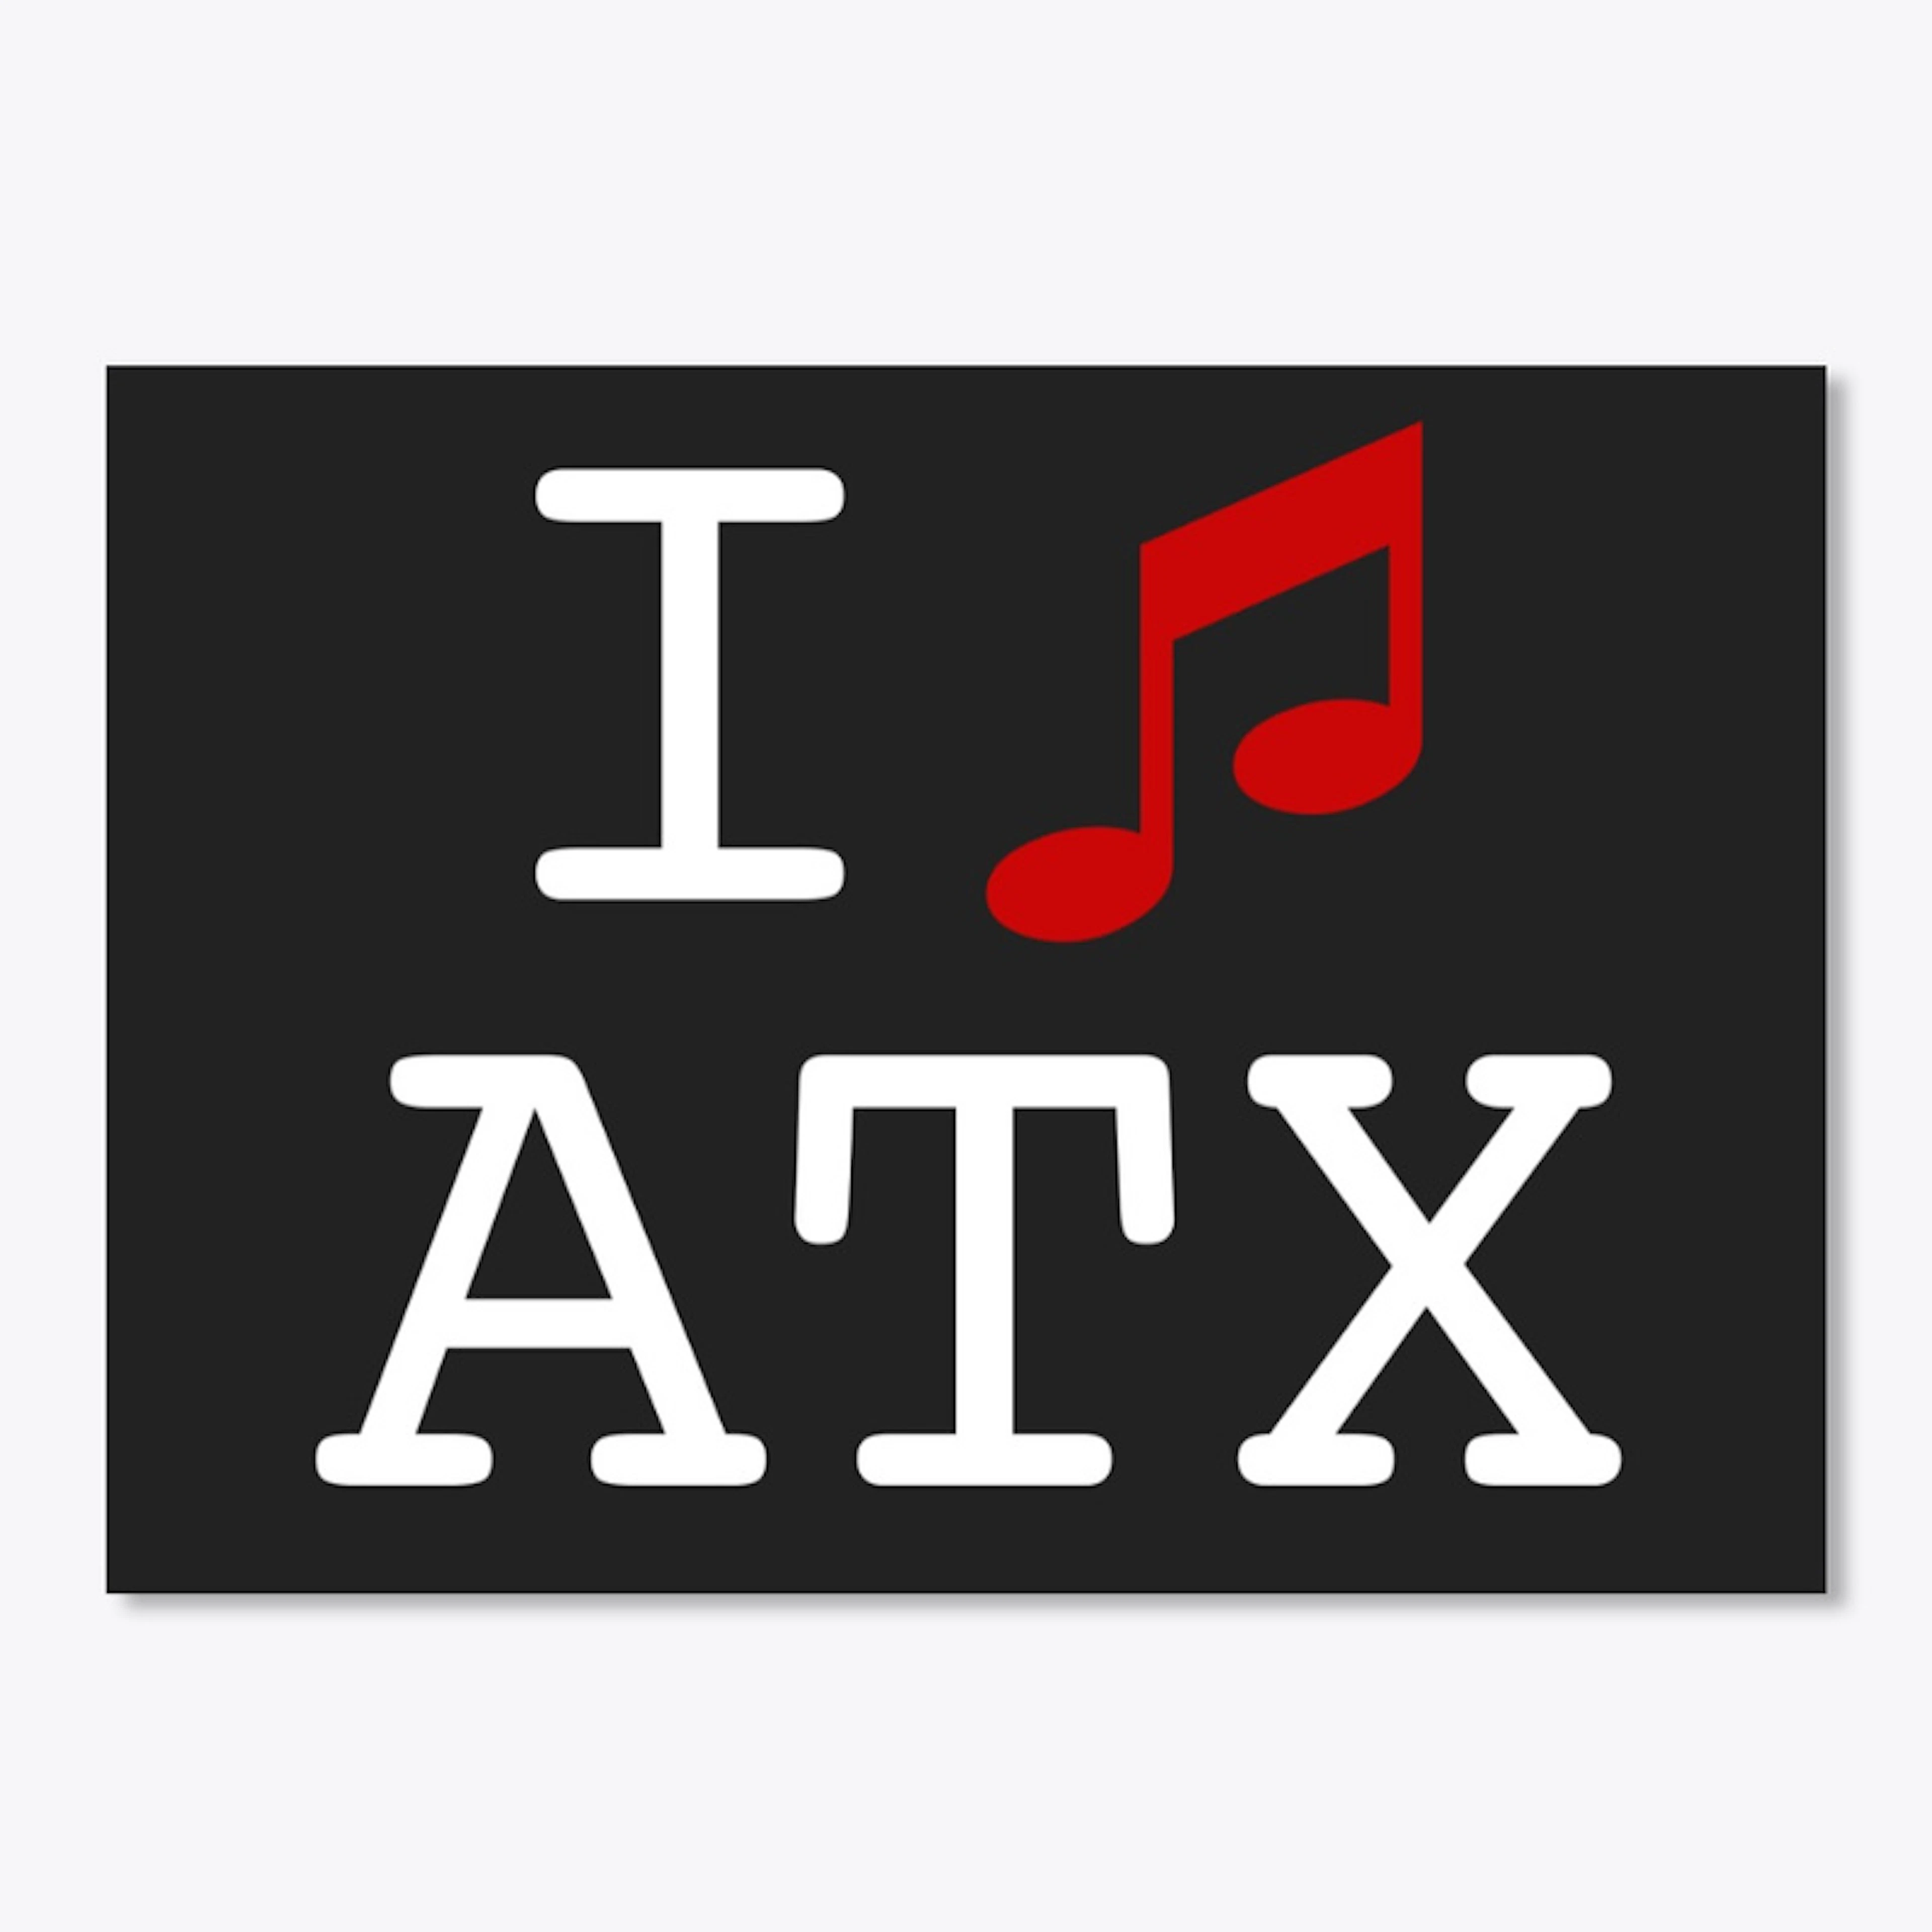 I (love) ATX - white lettering